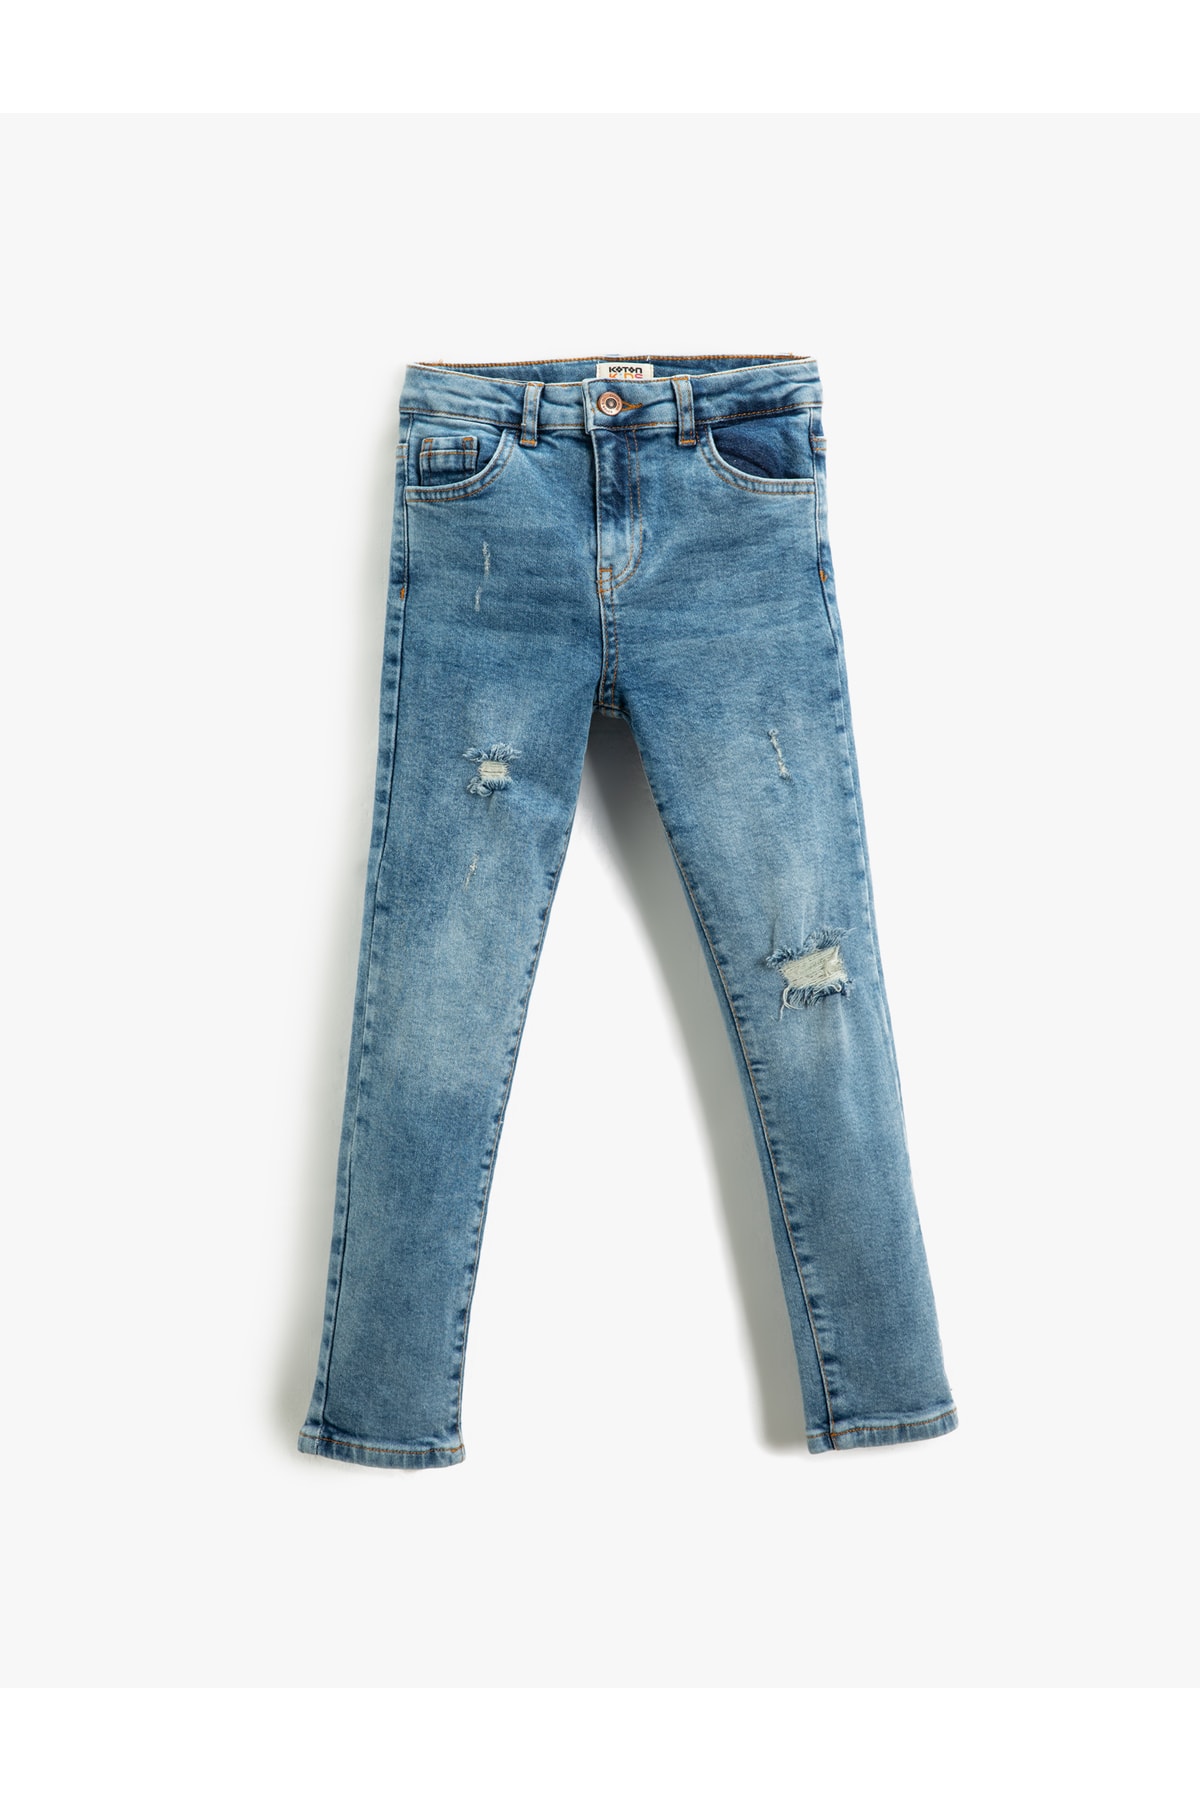 Levně Koton Denim Trousers Worn Detailed Cotton Slim Jeans with an Adjustable Elastic Waist.